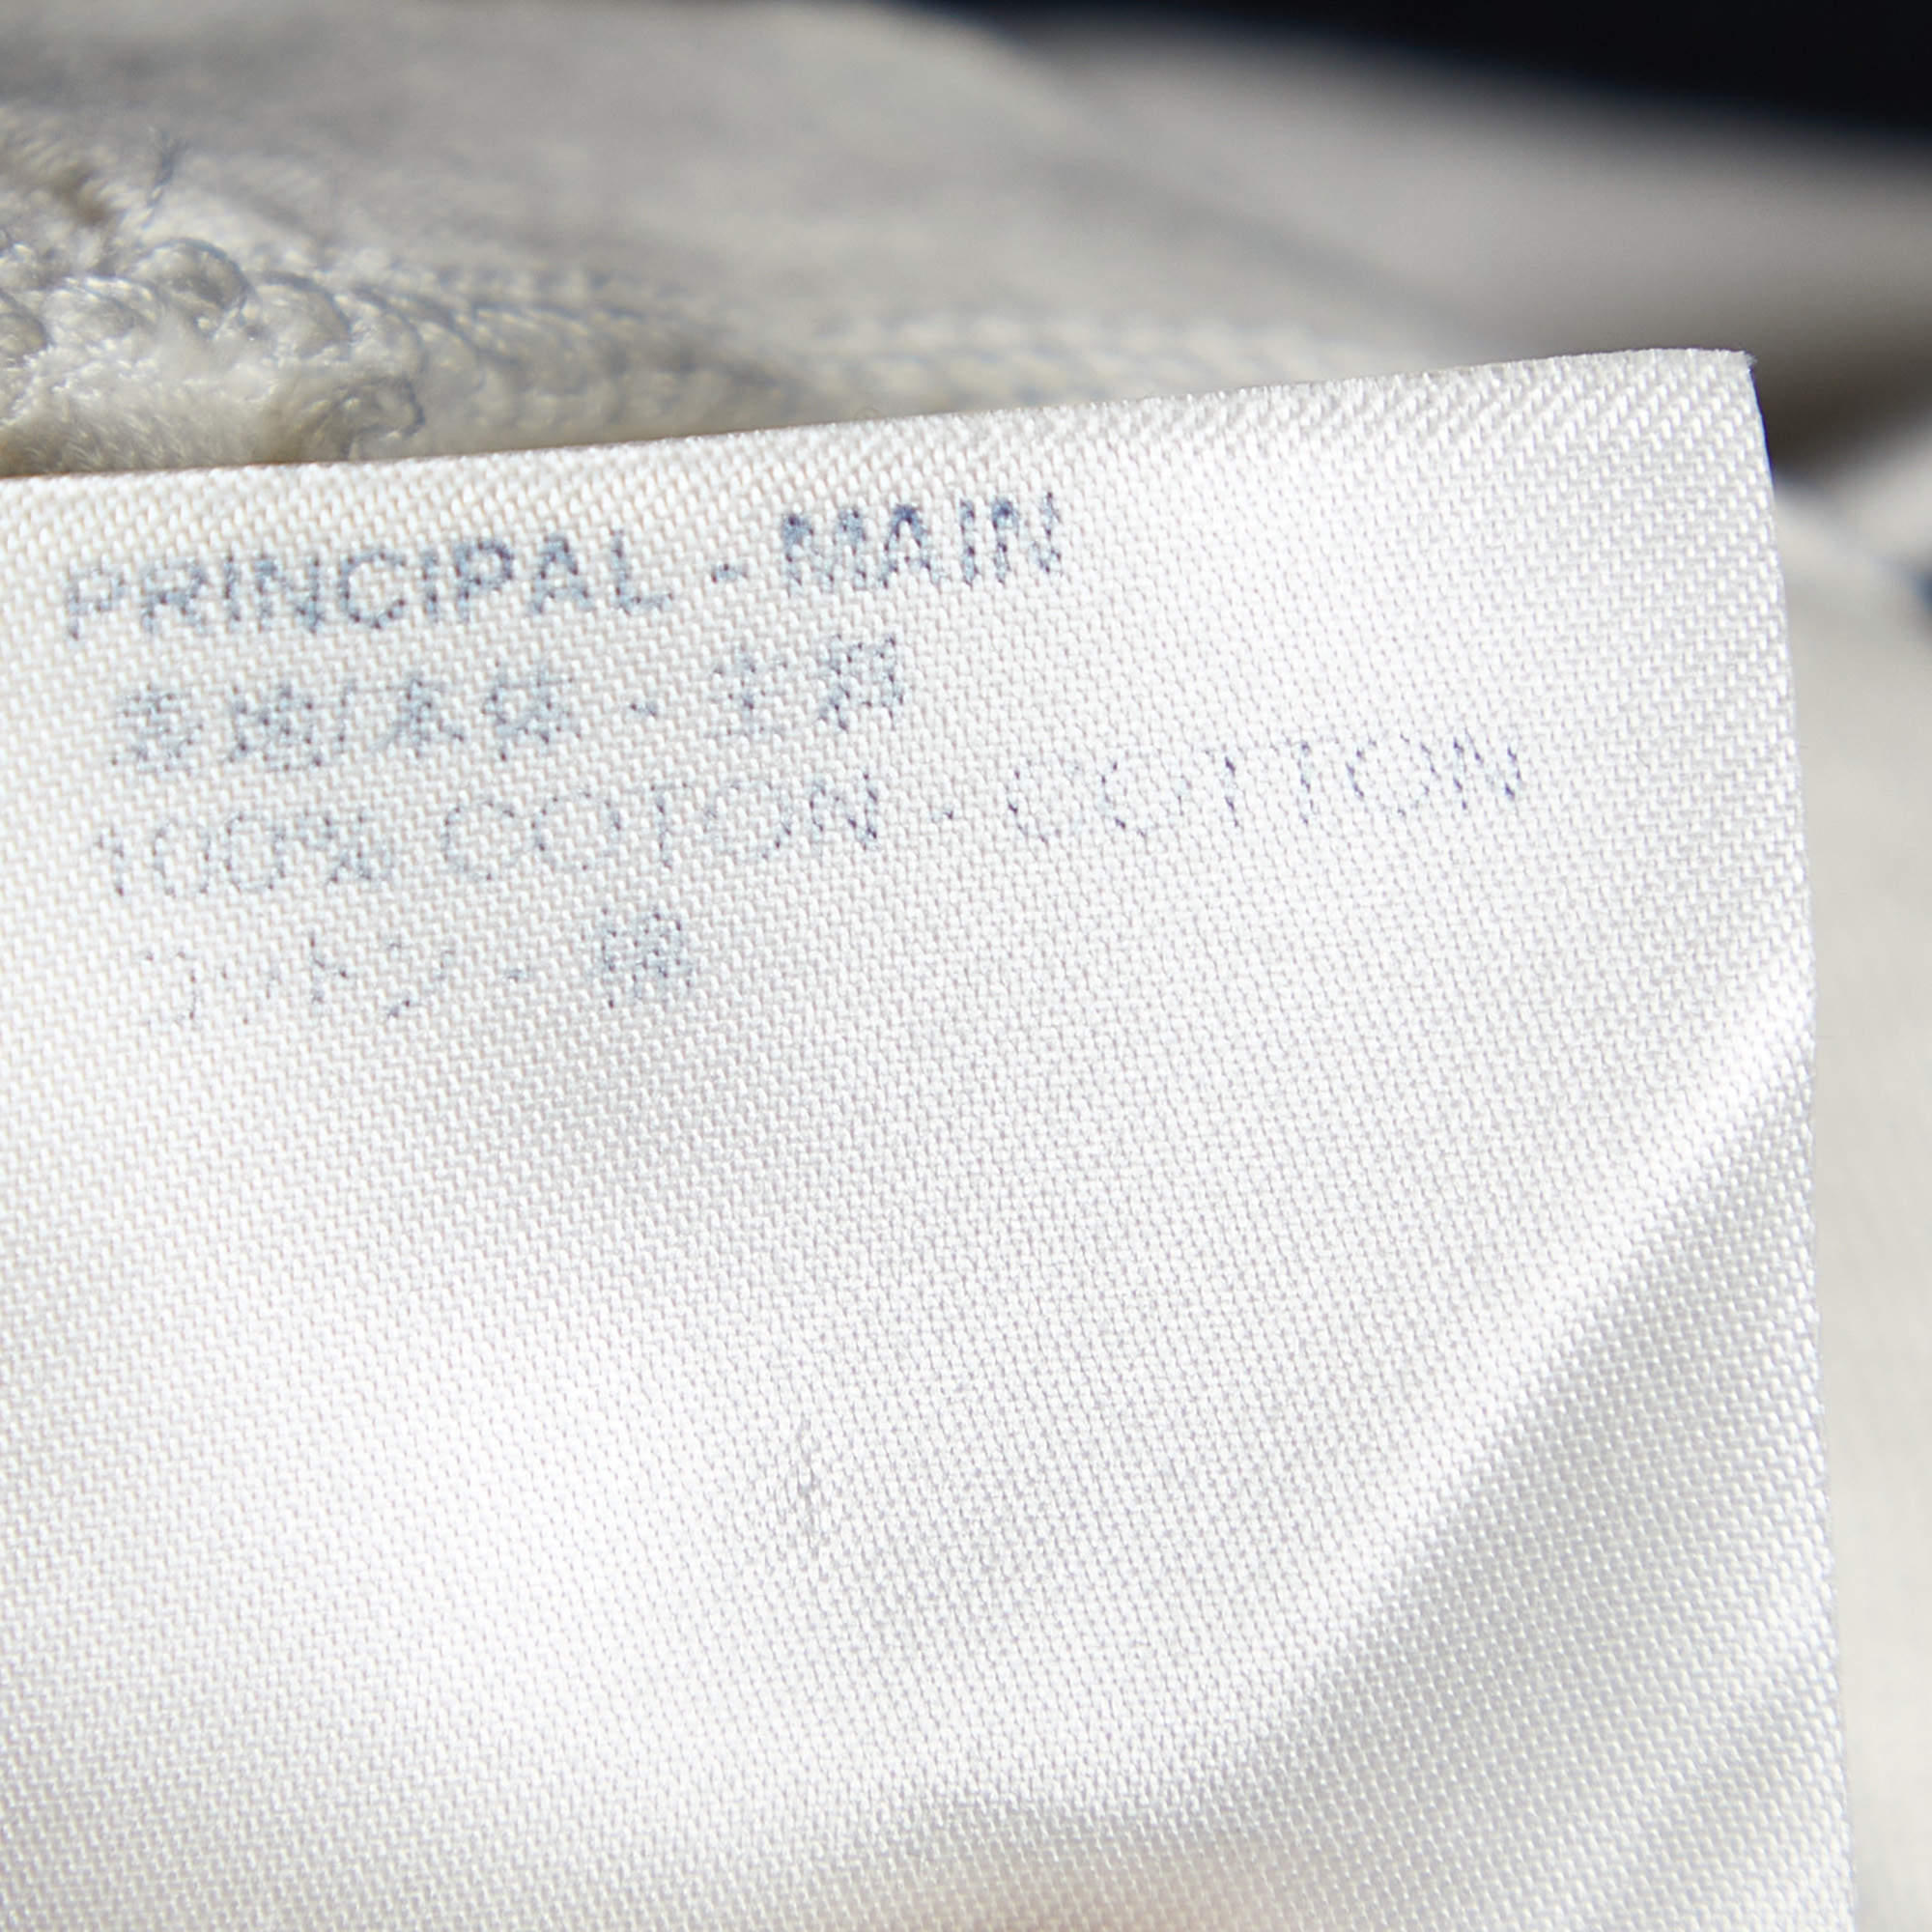 Louis Vuitton Off White Cotton Jacquard Velour Spaceman Motif T